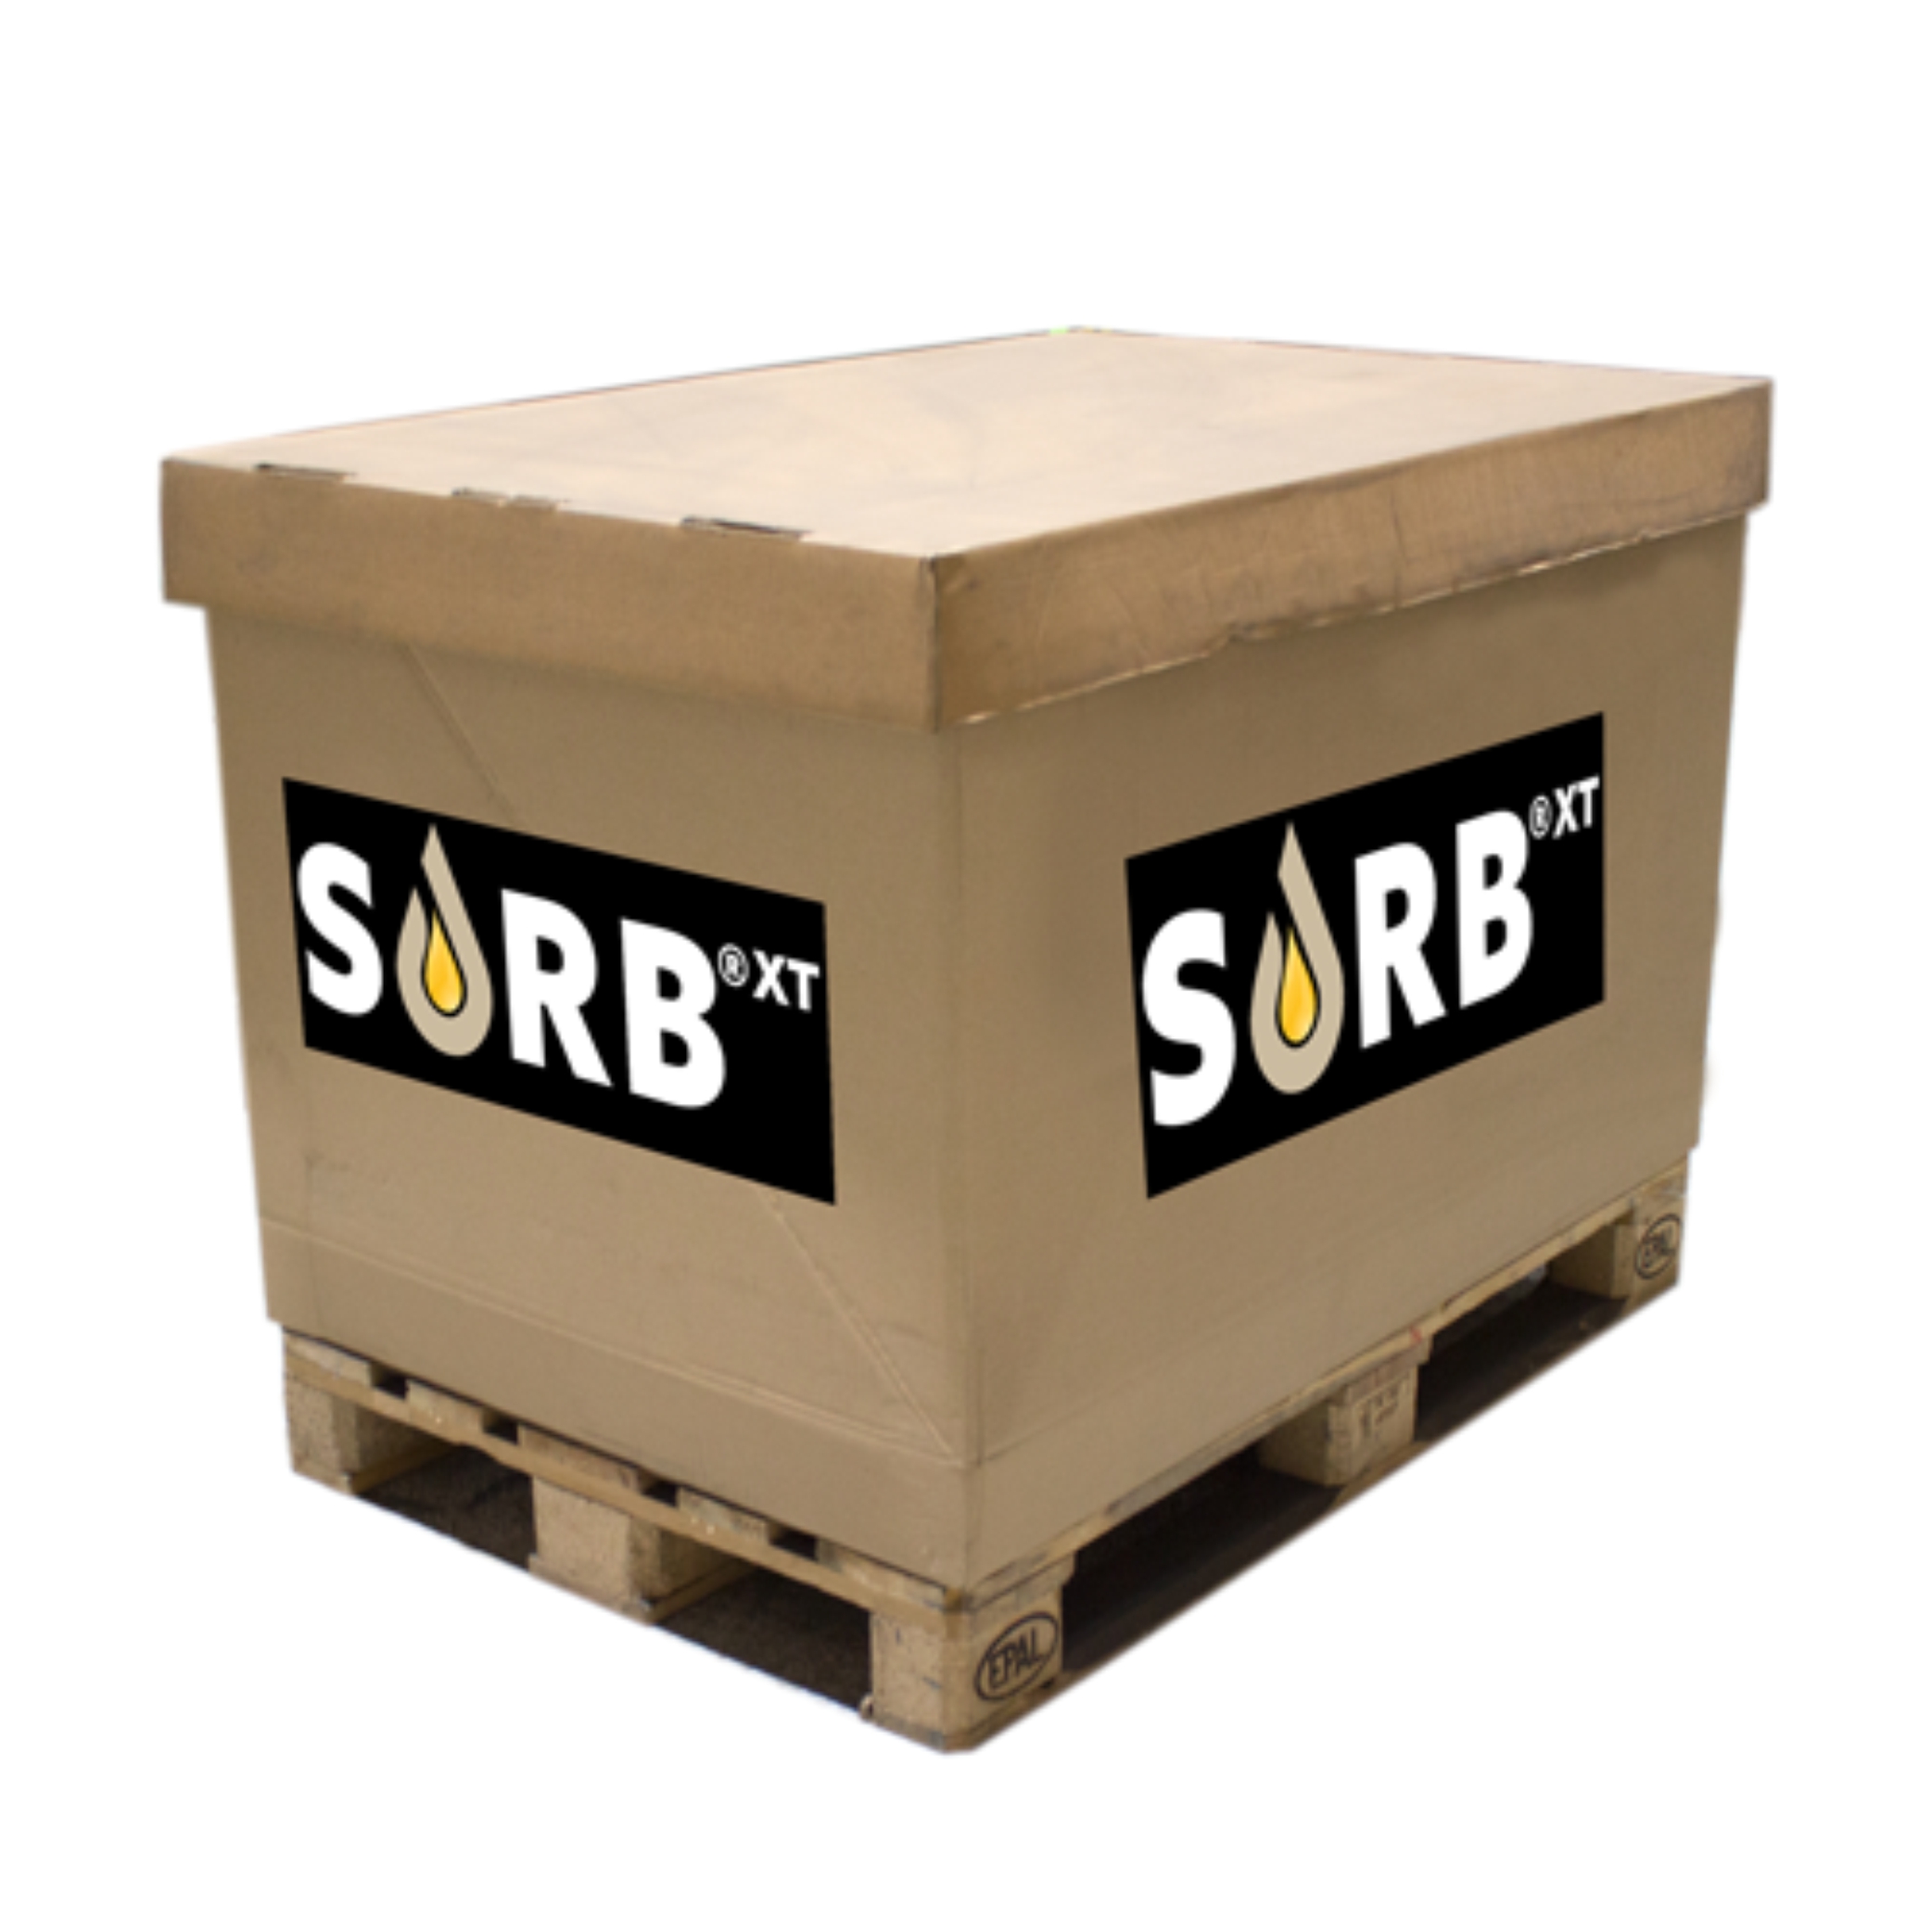 SORB®XT 750 Liter Box